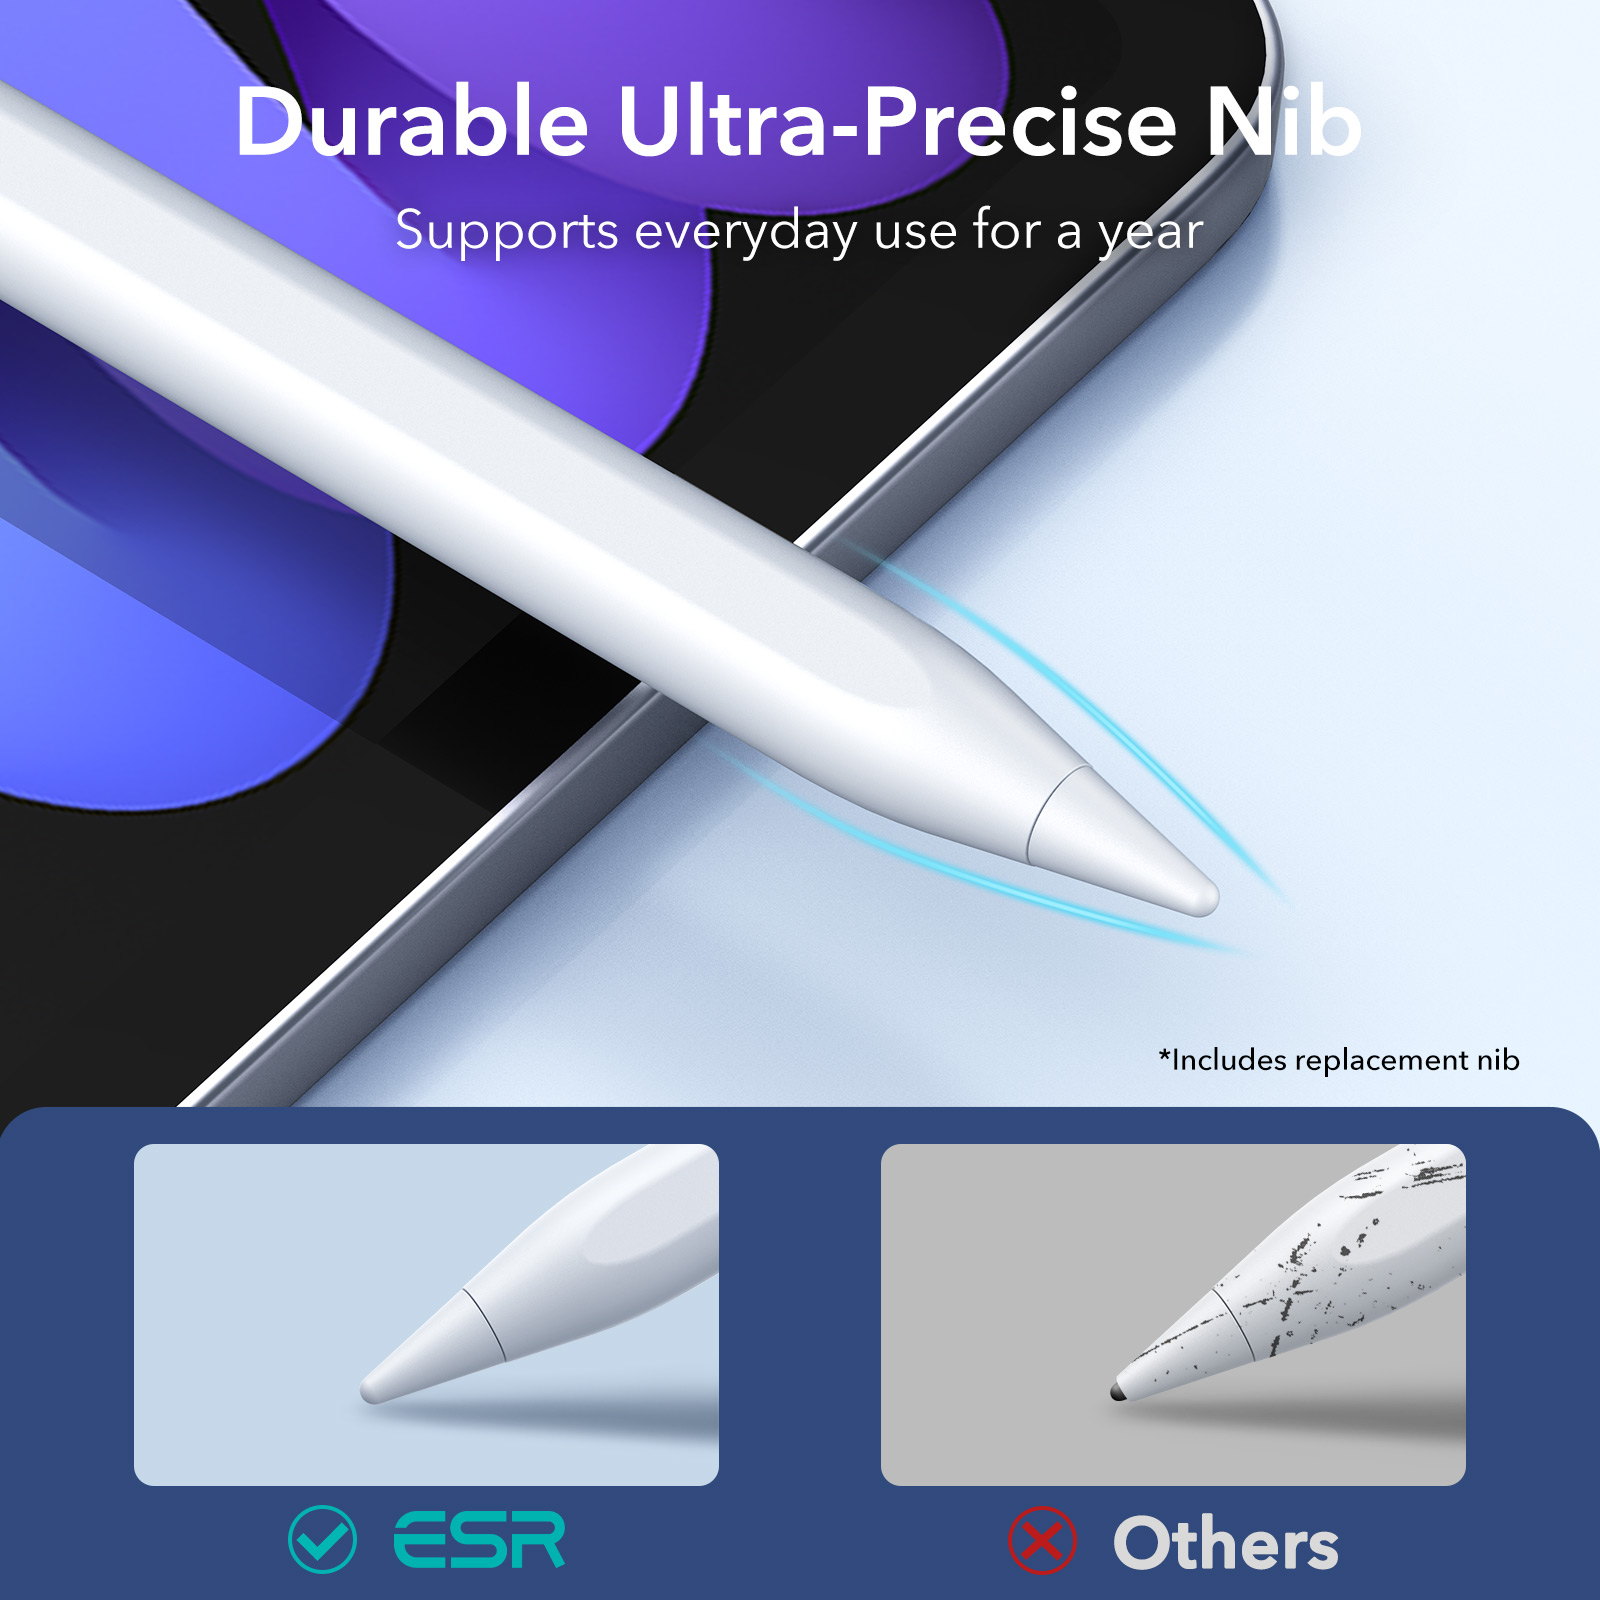 Bút cảm ứng ESR Digital iPad Stylus Pencil dành cho iPad Pro/ Ipad Air/ Ipad Mini/ Ipad Gen 6,7,8,9 - Hàng chính hãng